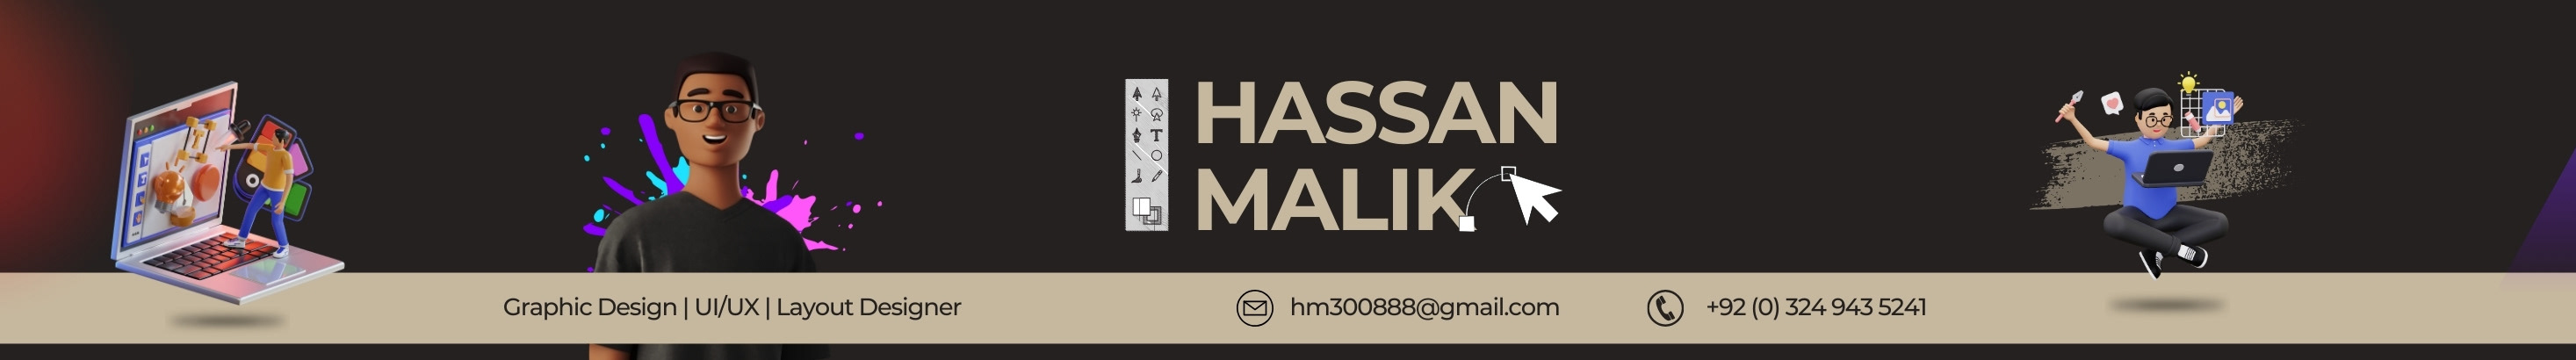 Hassan Malik 的个人资料横幅